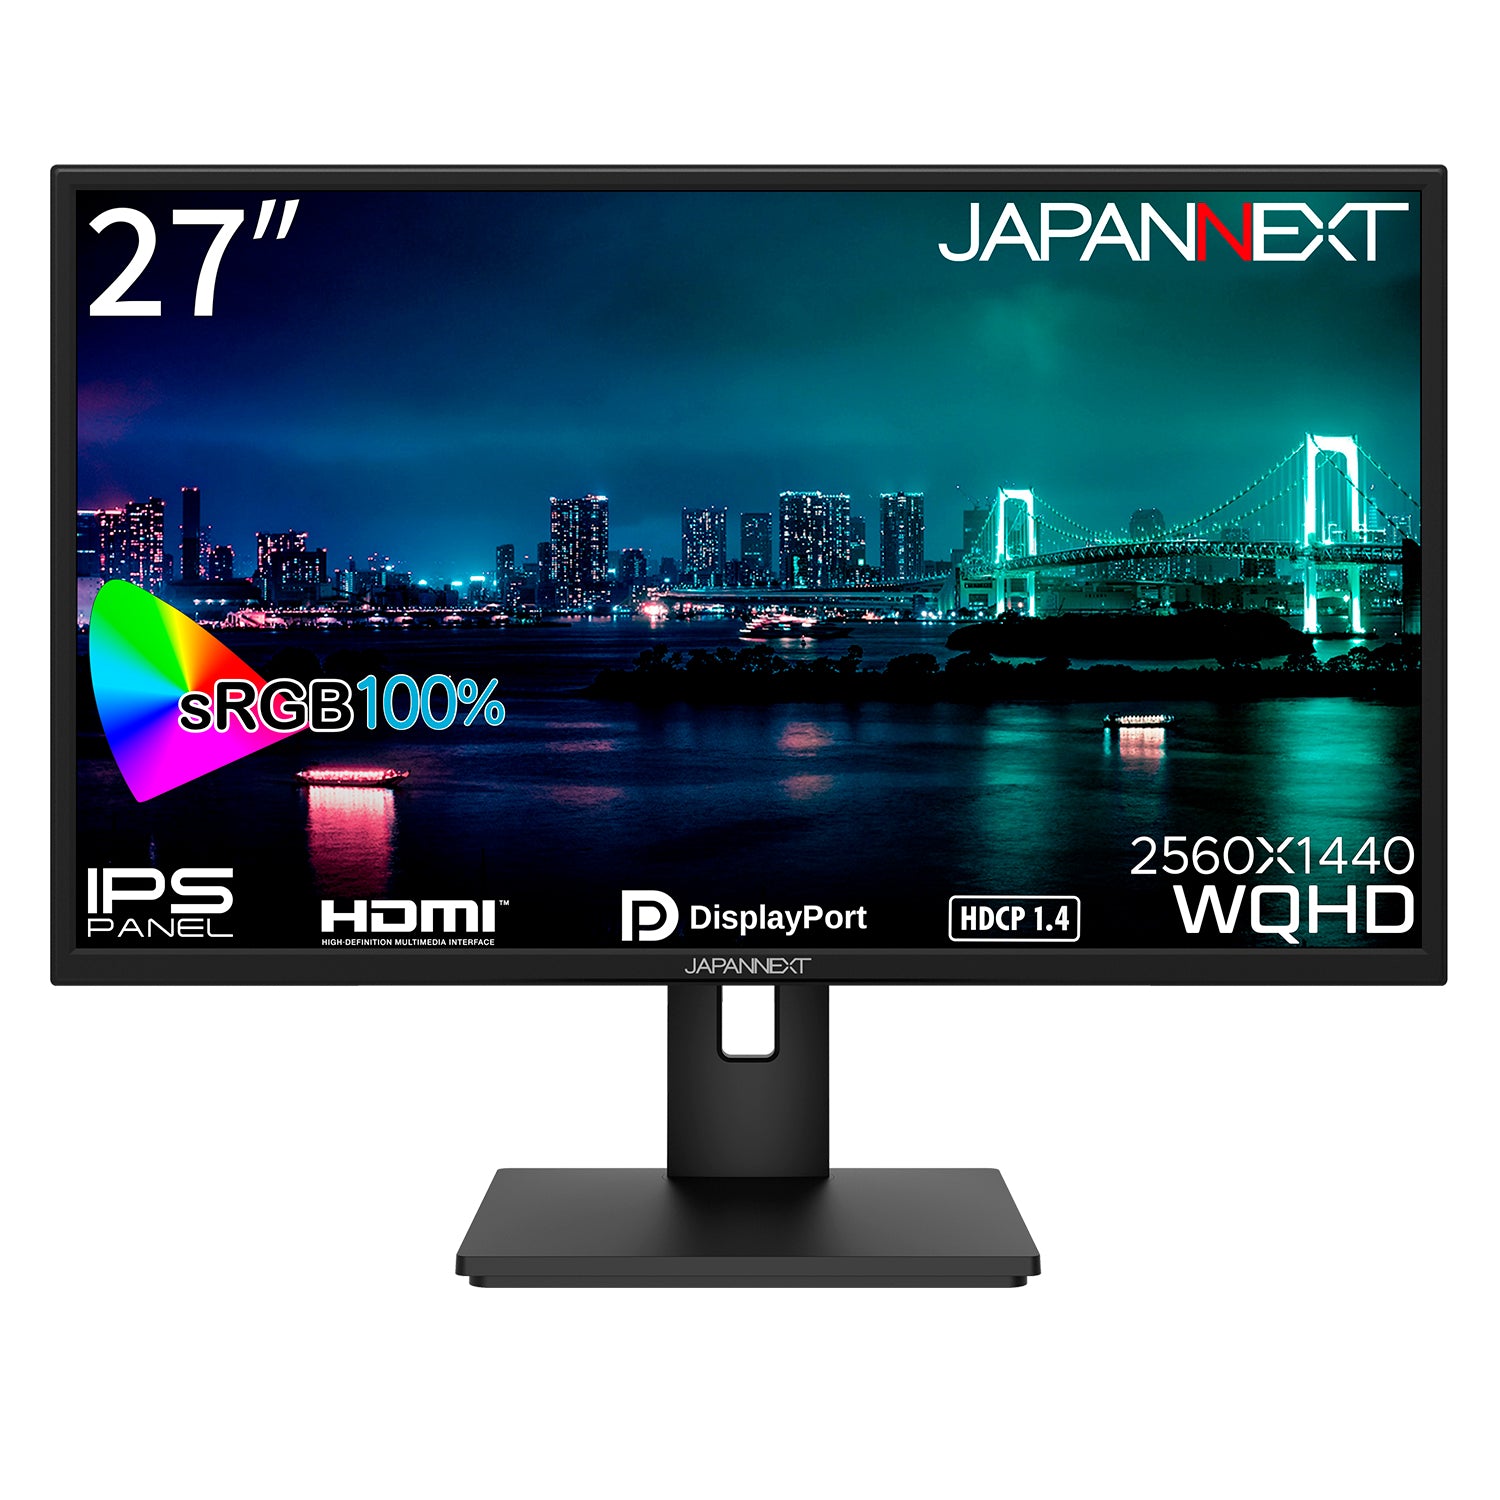 JAPANNEXT 27インチ IPSパネル搭載 WQHD(2560x1440)解像度 液晶 